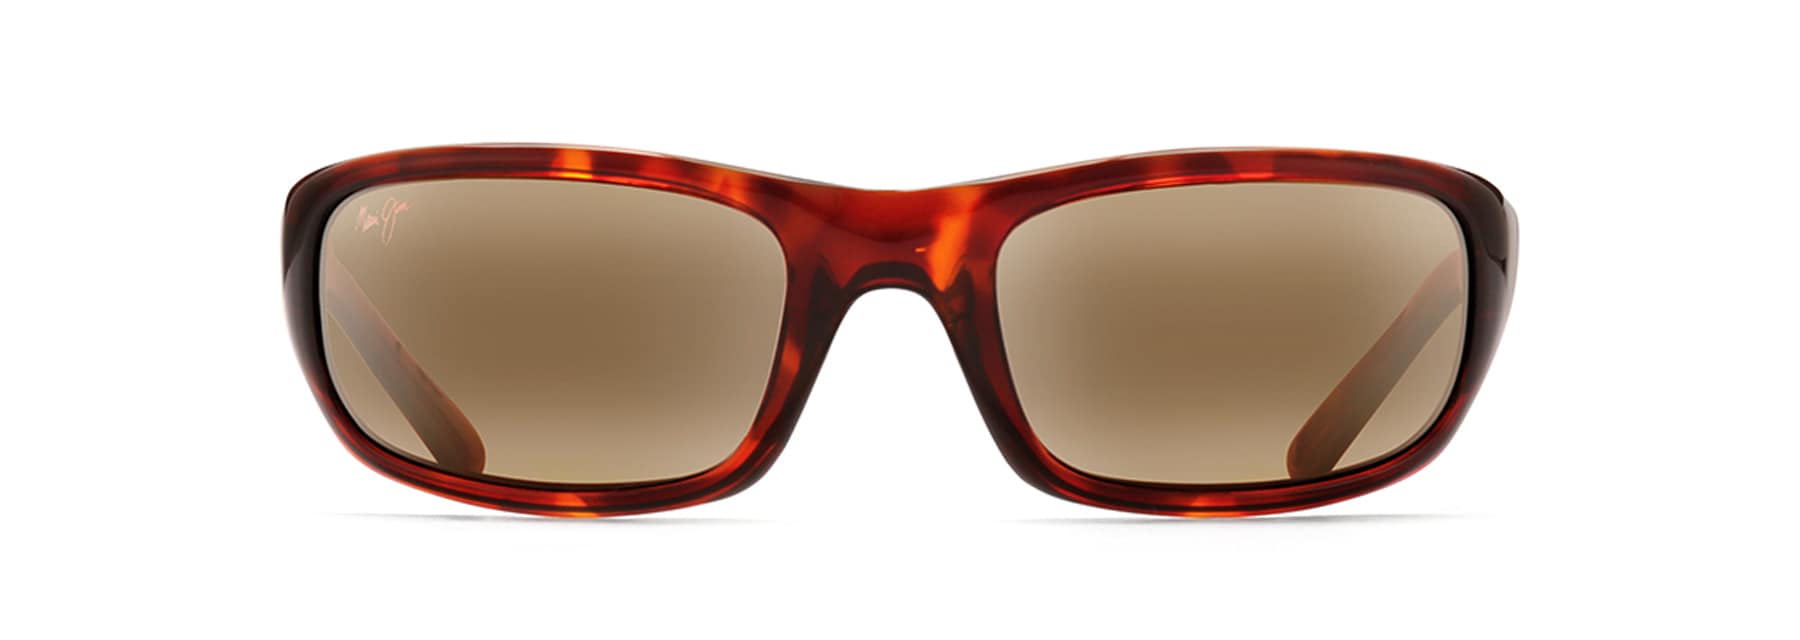 Maui Jim Sunglasses for sale in Vernon, Texas | Facebook Marketplace